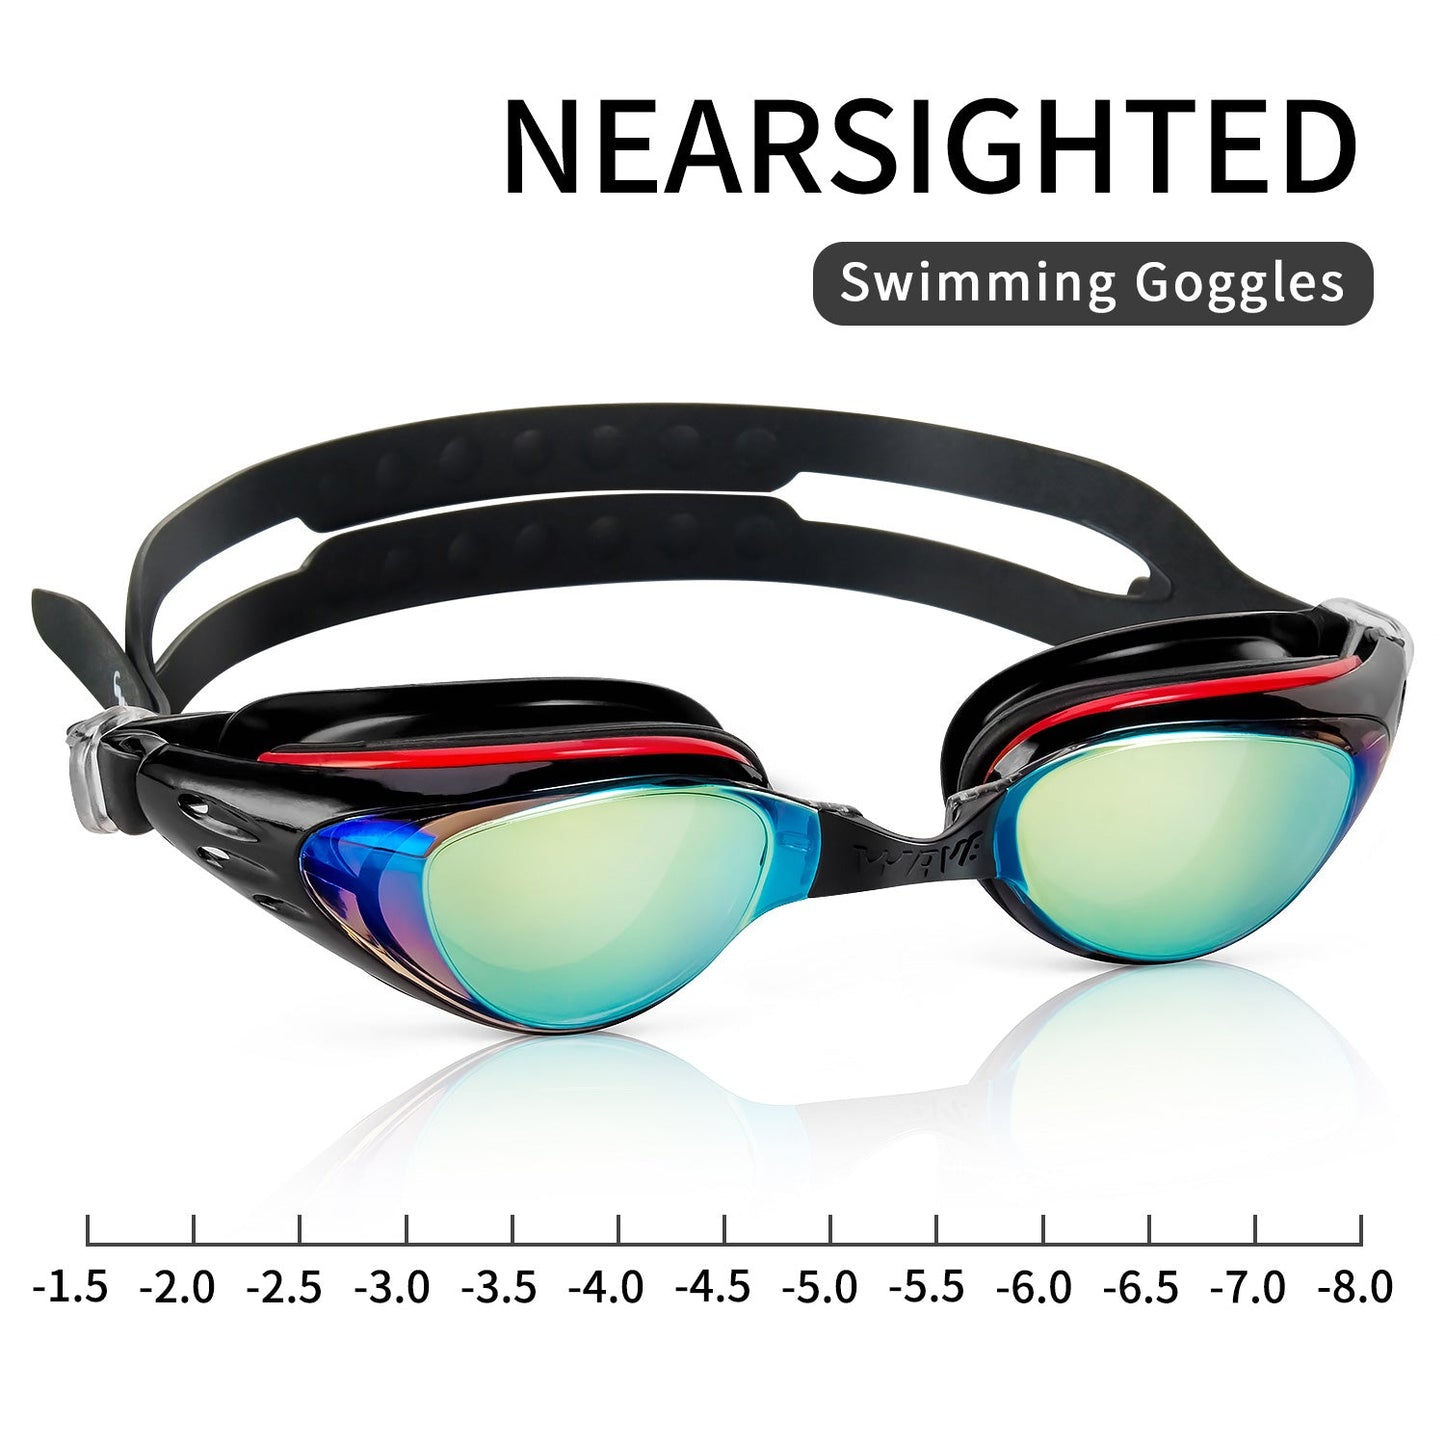 Wave Prescription Nearsighted Myopia Swim Goggles Glasses Degree Adults Electroplate Shortsighted Men Women